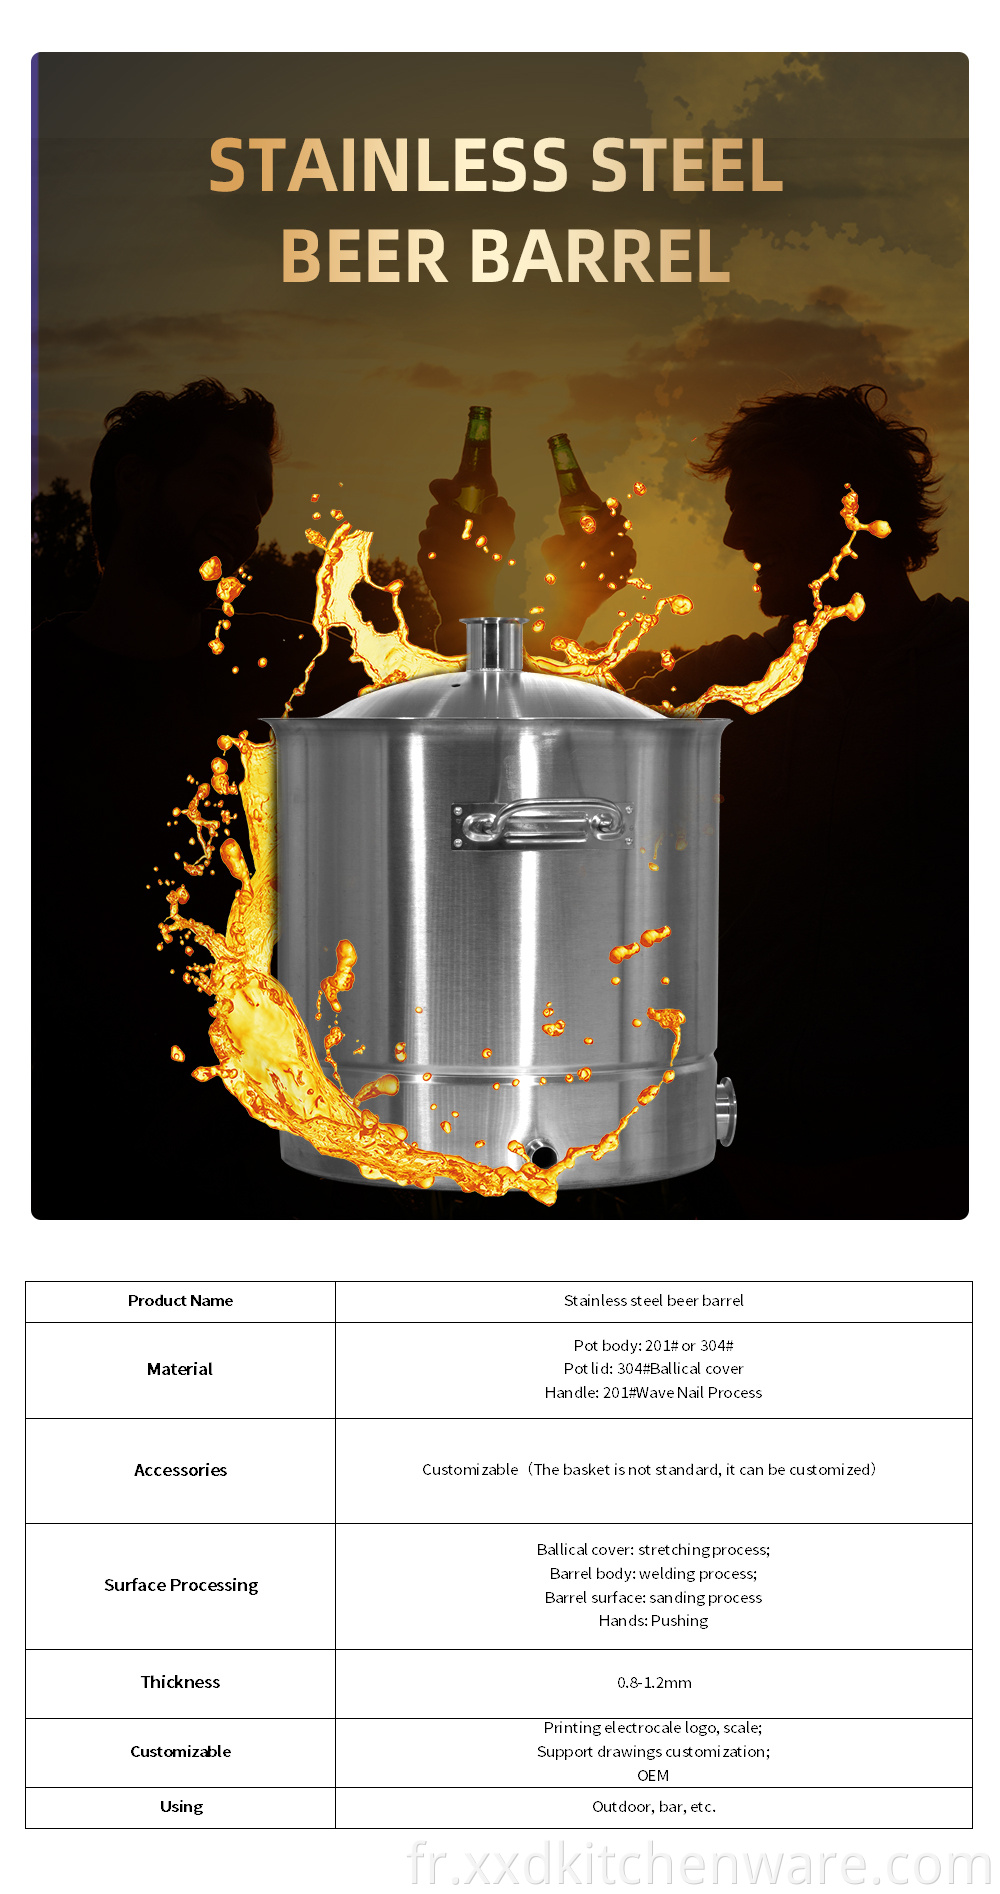 Commercial Grade Stainless Steel Beer Barrel